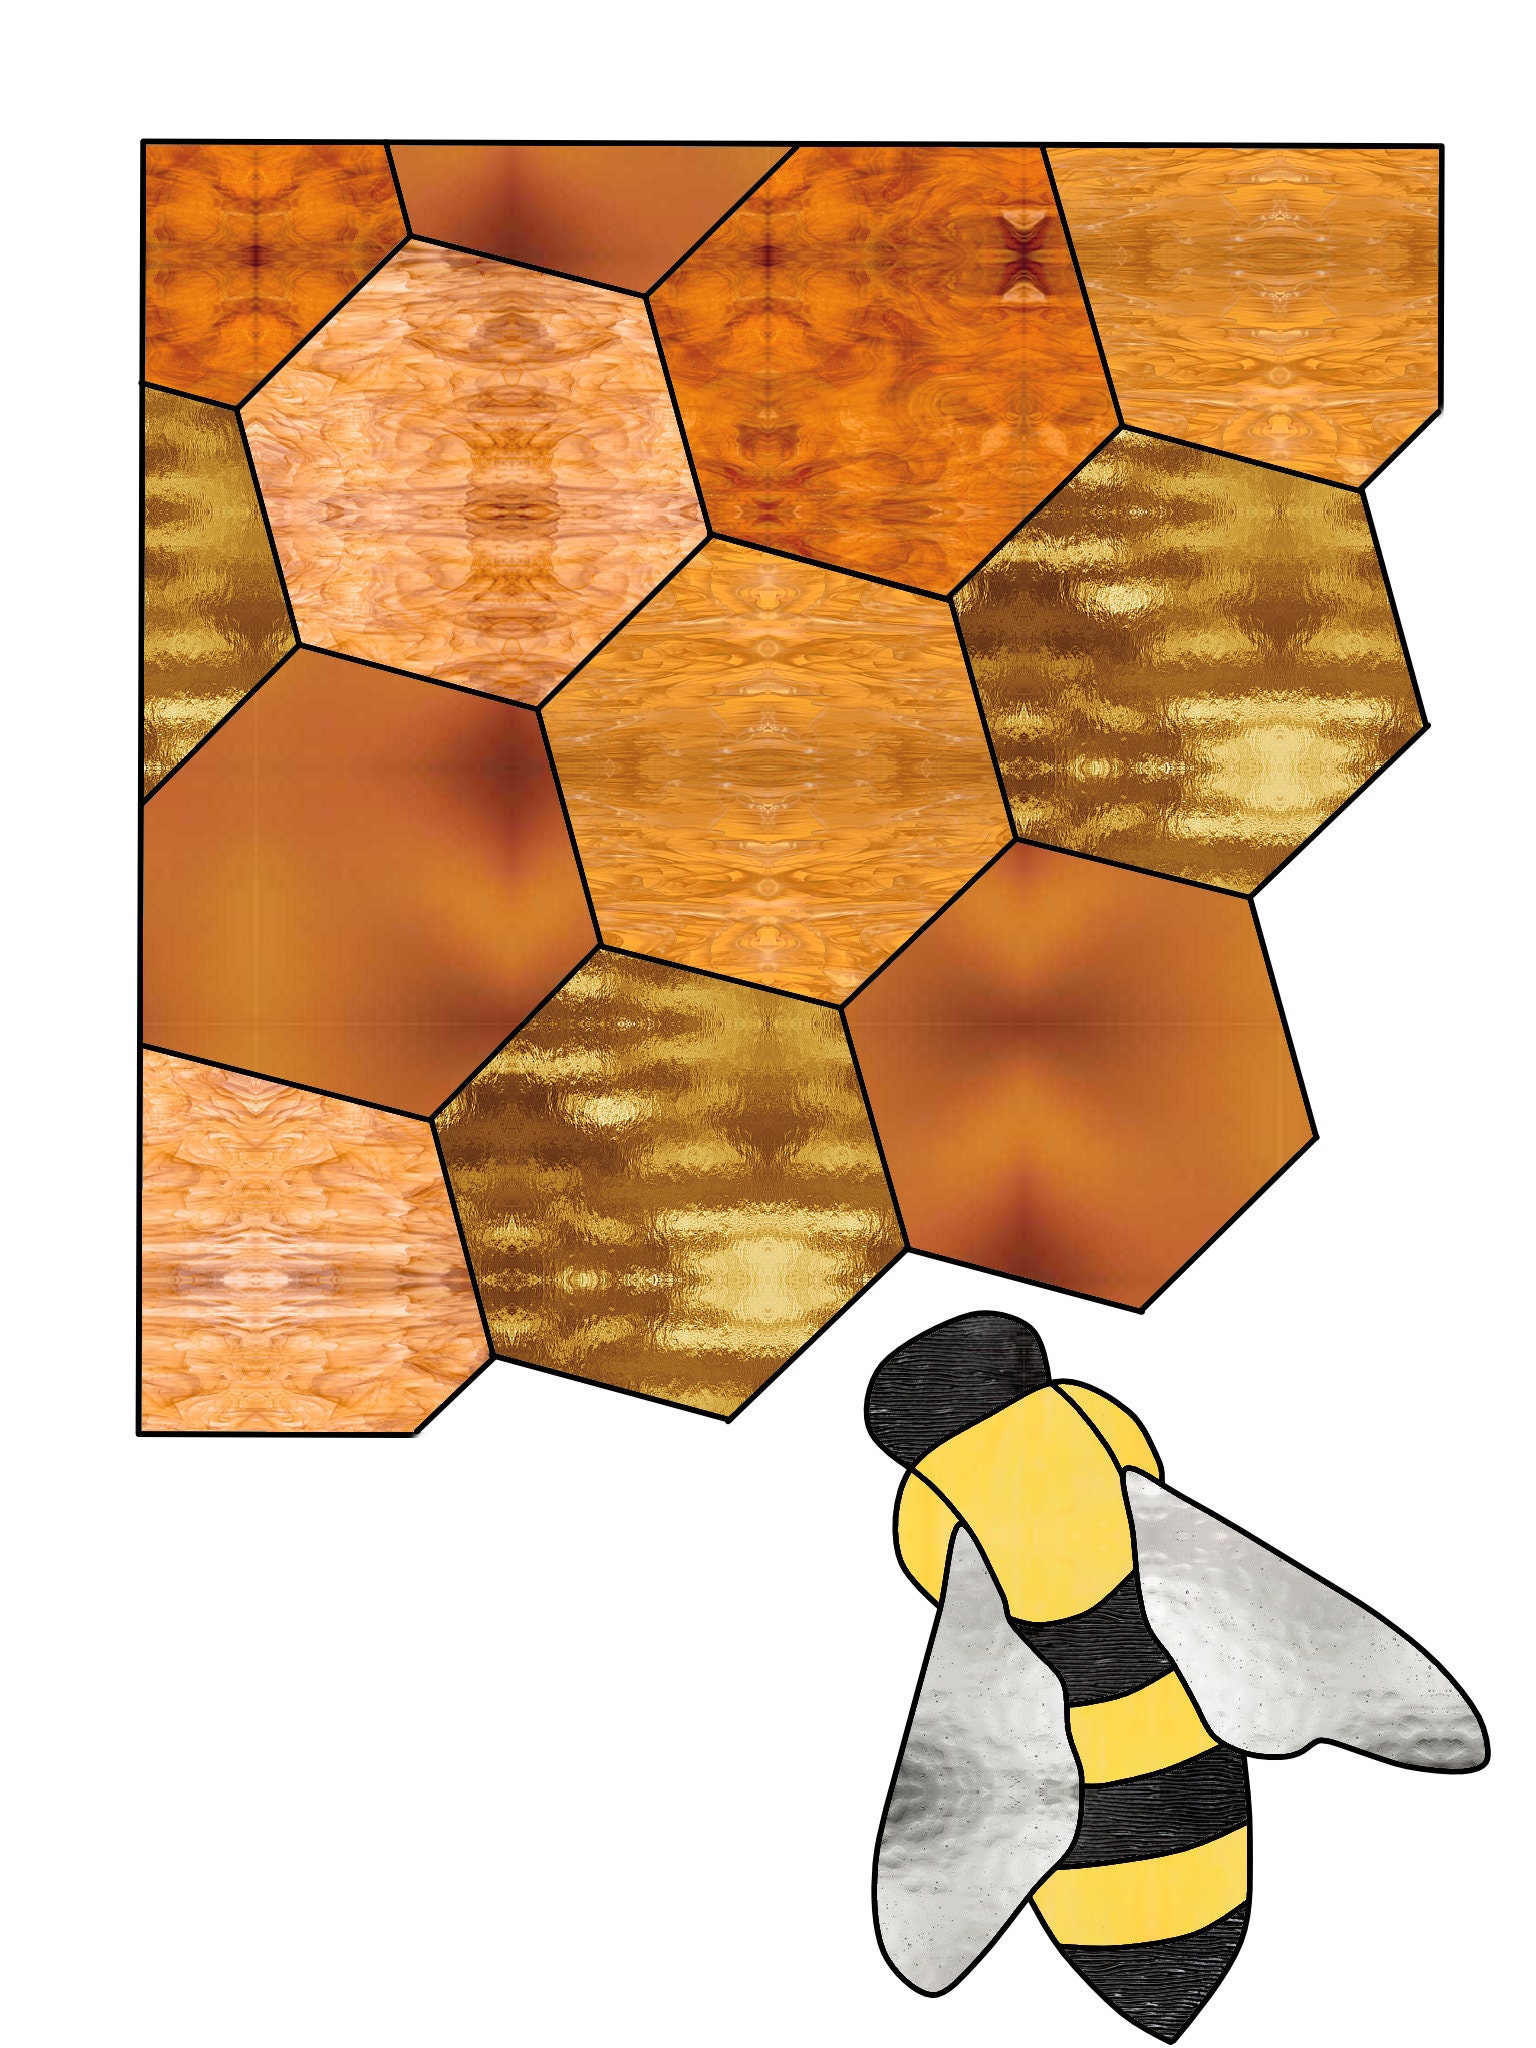 027 - Minecraft - Bee Papercraft Model 😀 